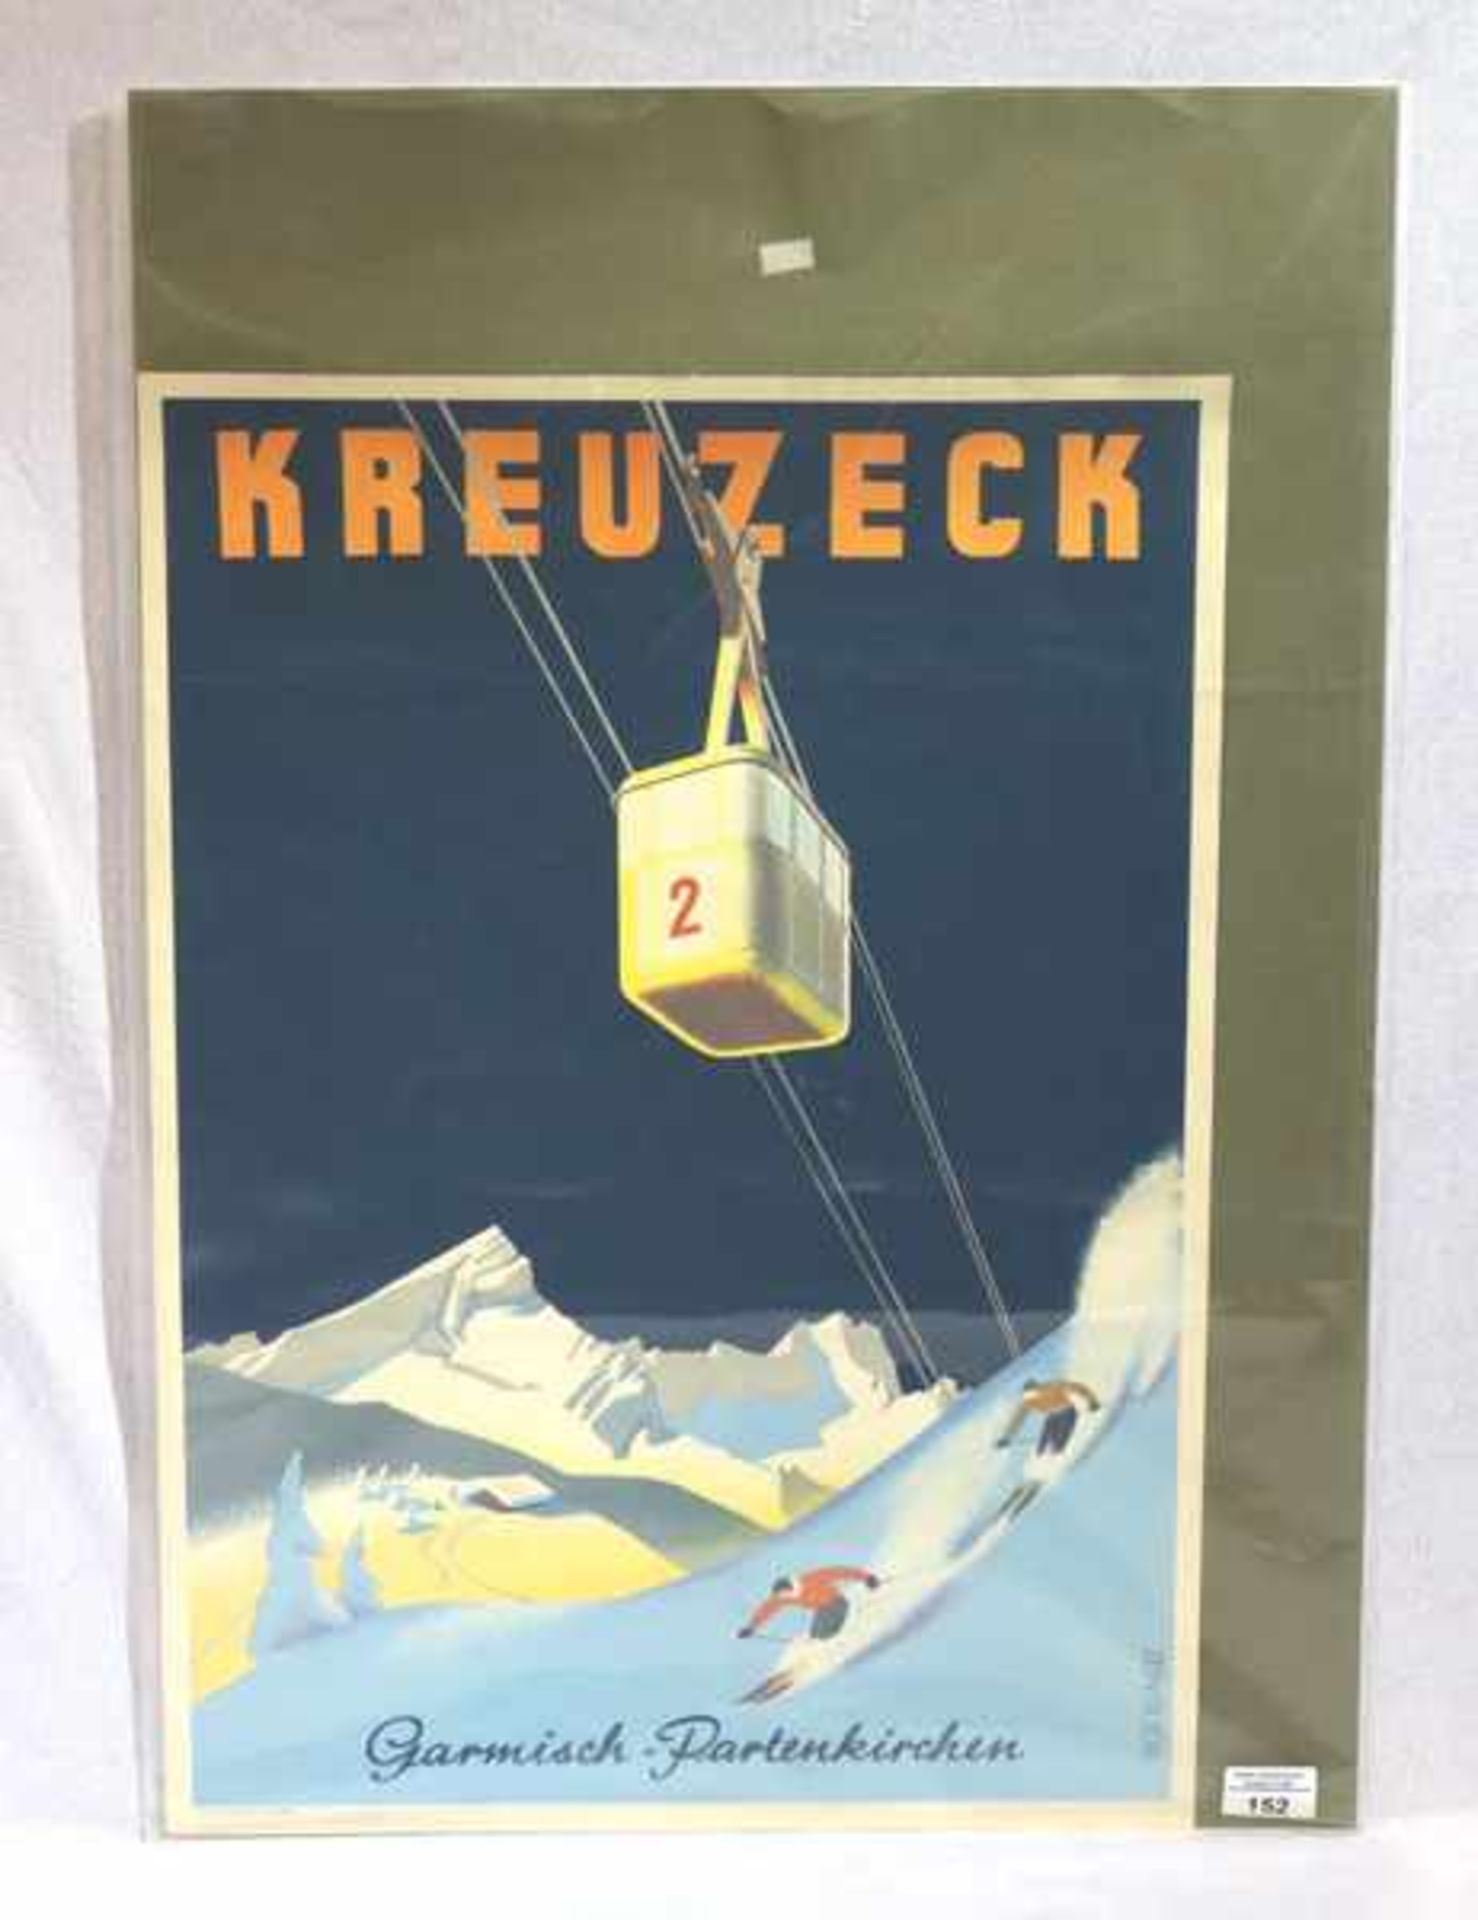 Plakat A2, 'Kreuzeck, Garmisch-Partenkirchen', ca. 1935/40, von Prof. Plenk